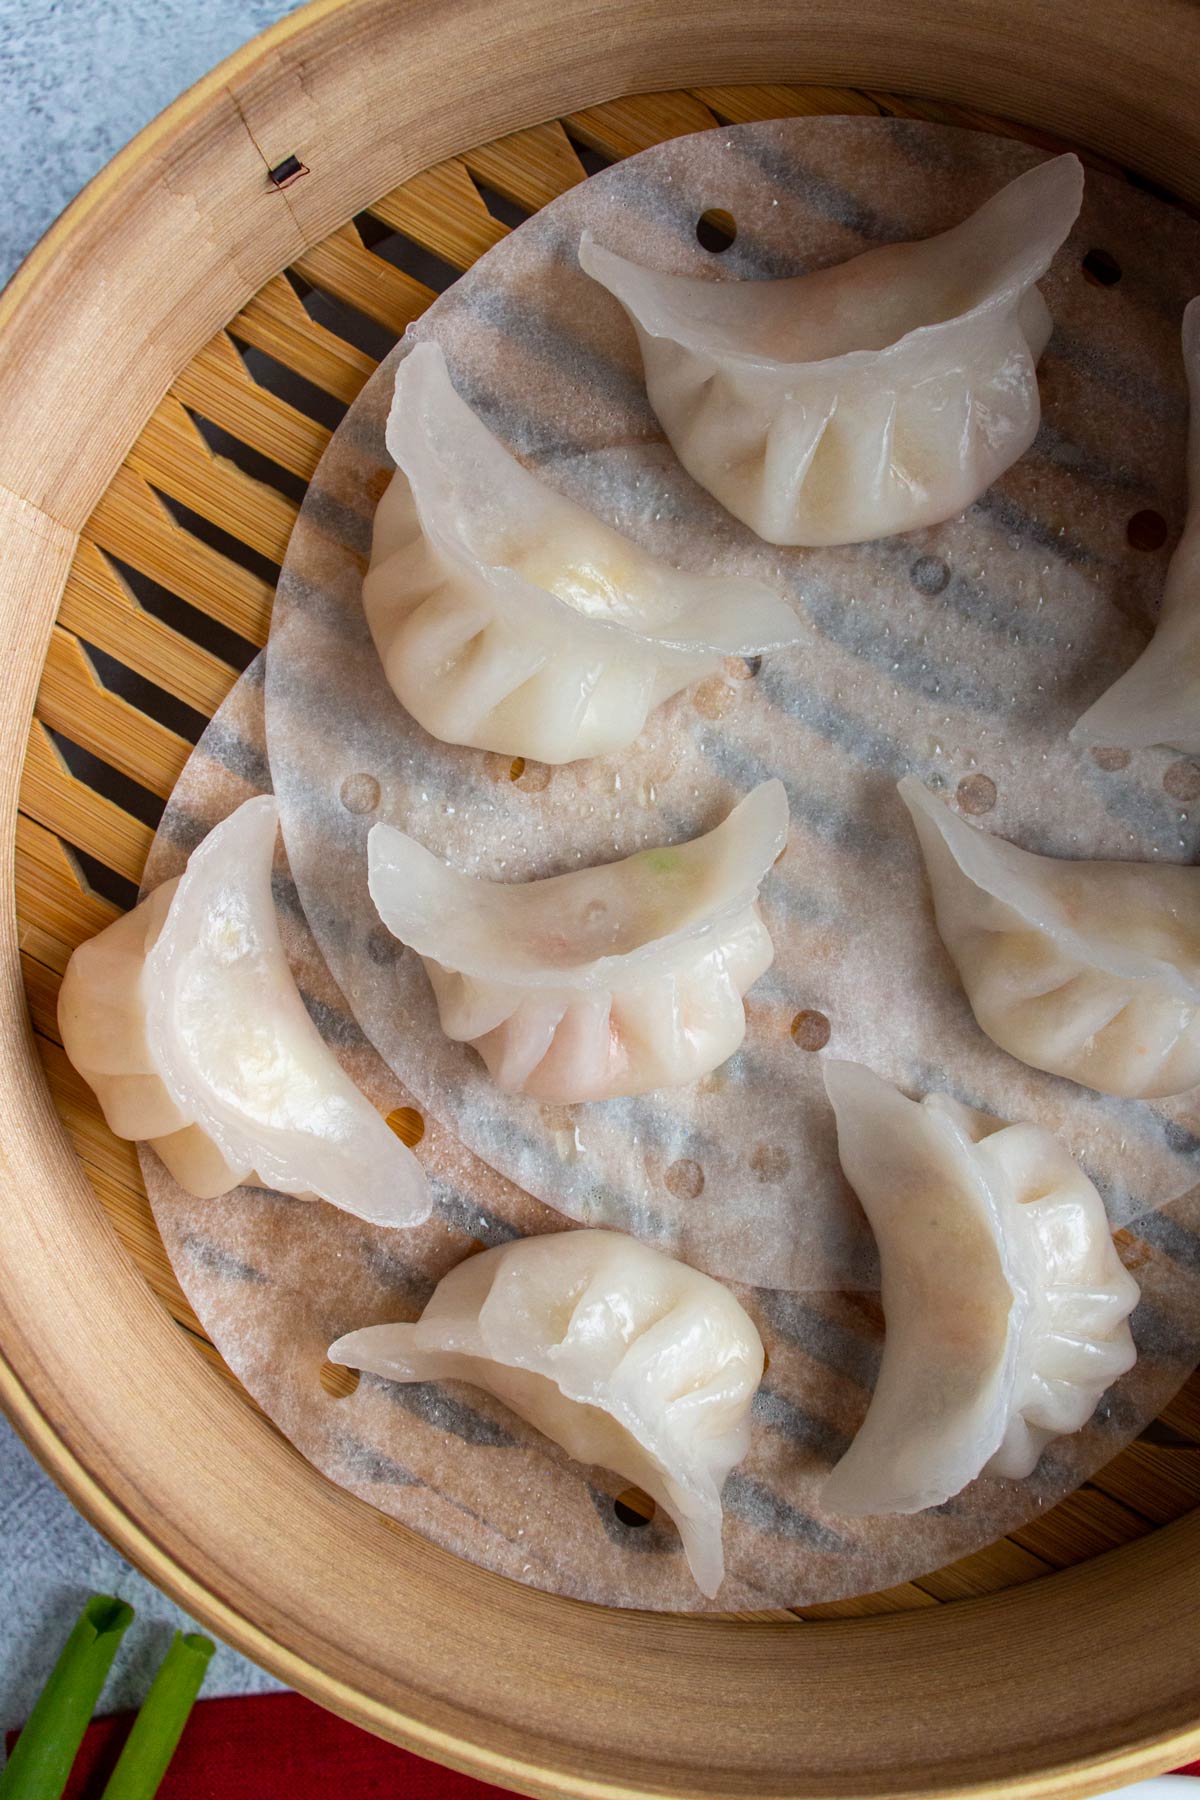 Translucent white crystal shrimp dumplings with crescent shapes in a bamboo steamer basket.